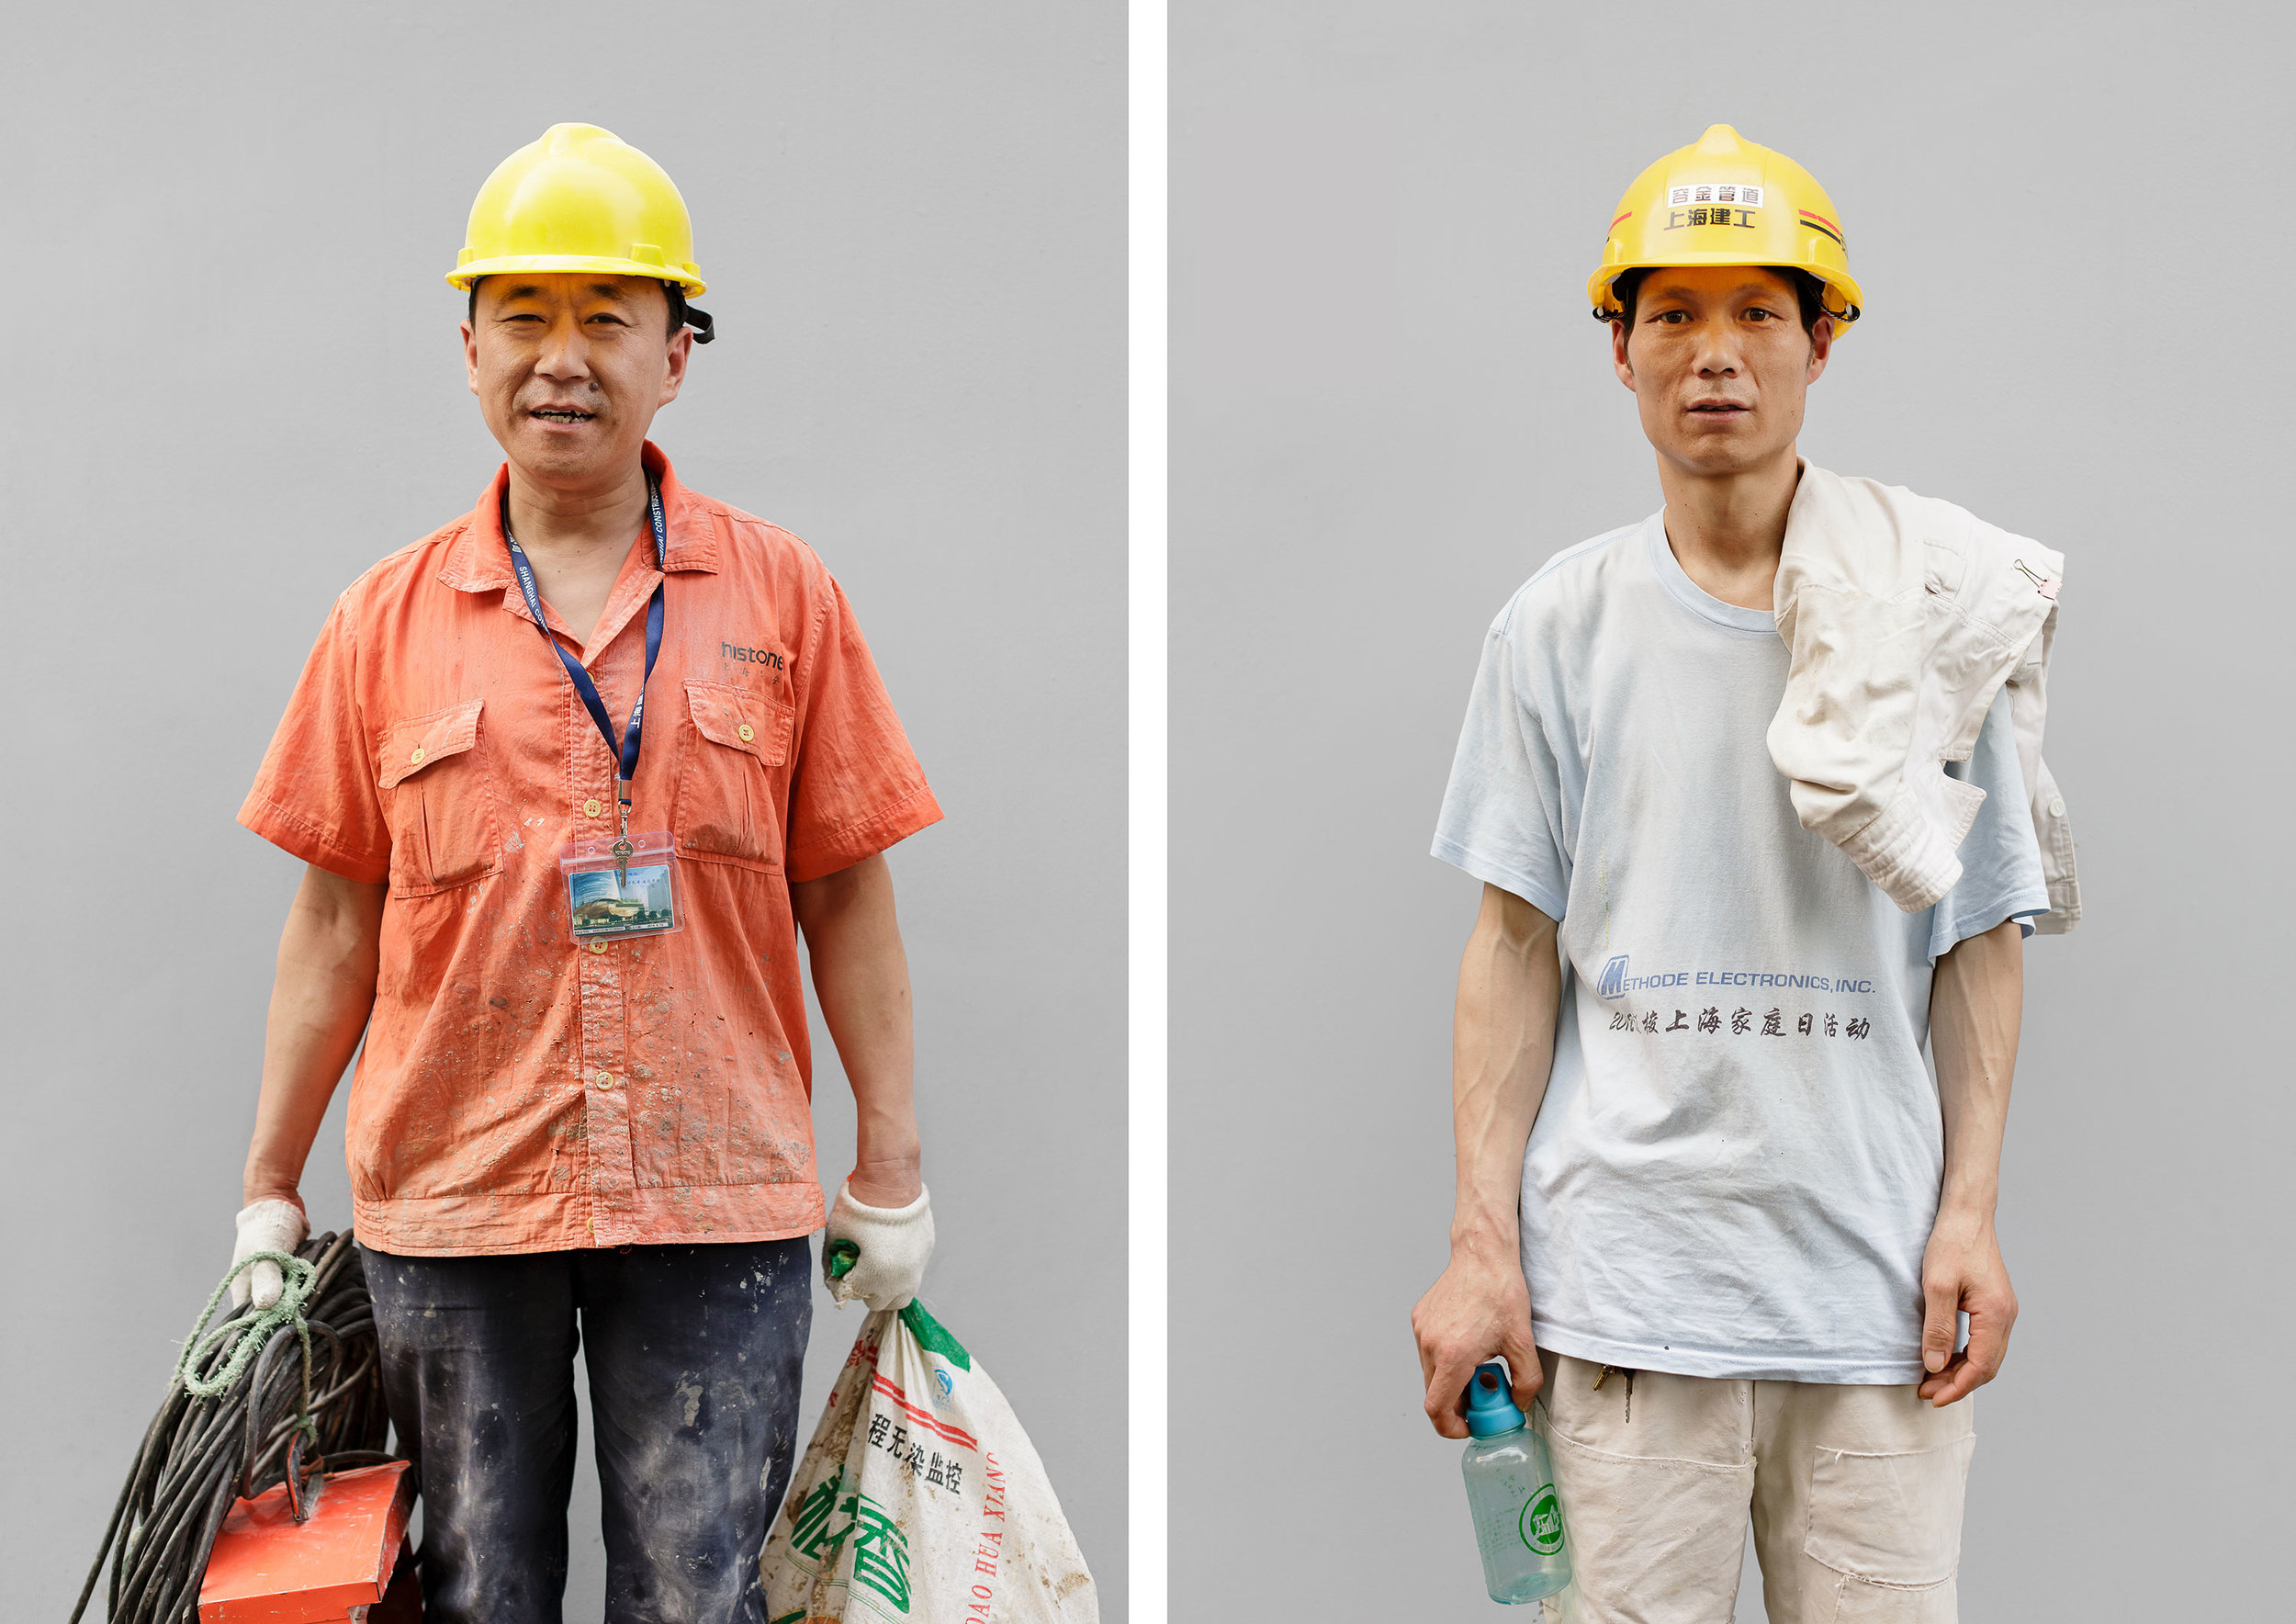 Shanghai_Tower-workers-and-building23.jpg